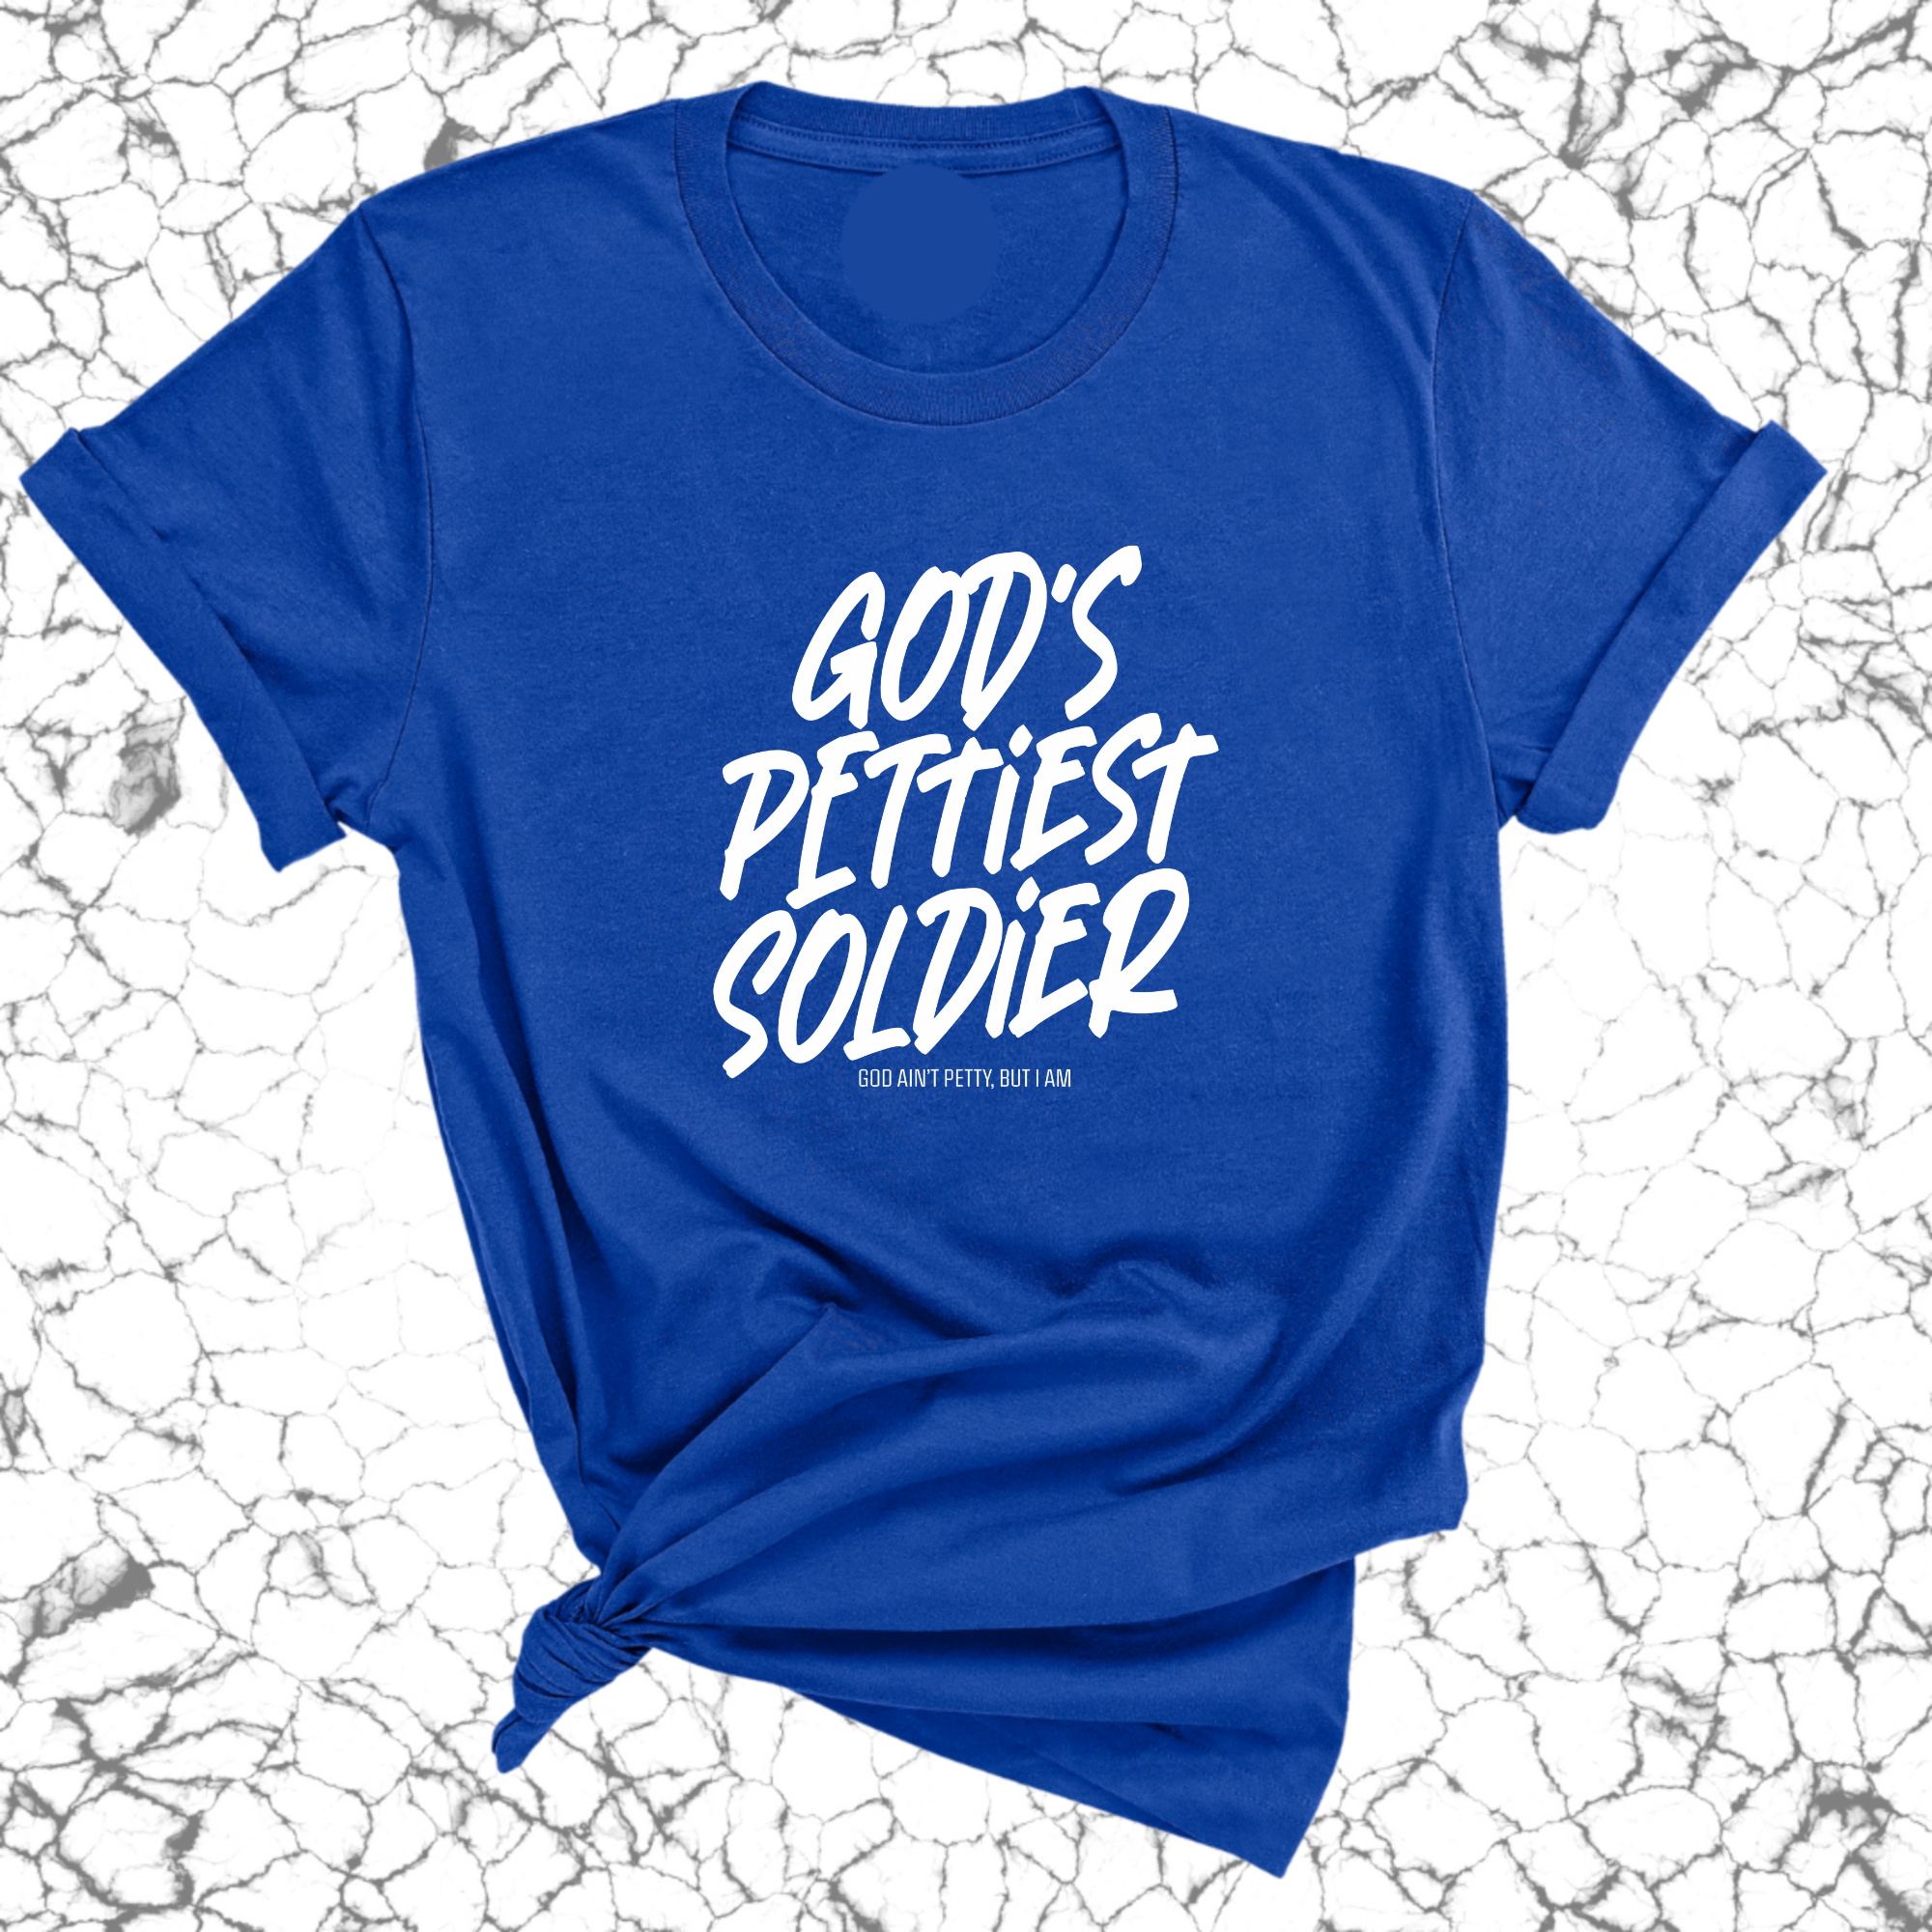 God's Pettiest Soldier Unisex Tee-T-Shirt-The Original God Ain't Petty But I Am